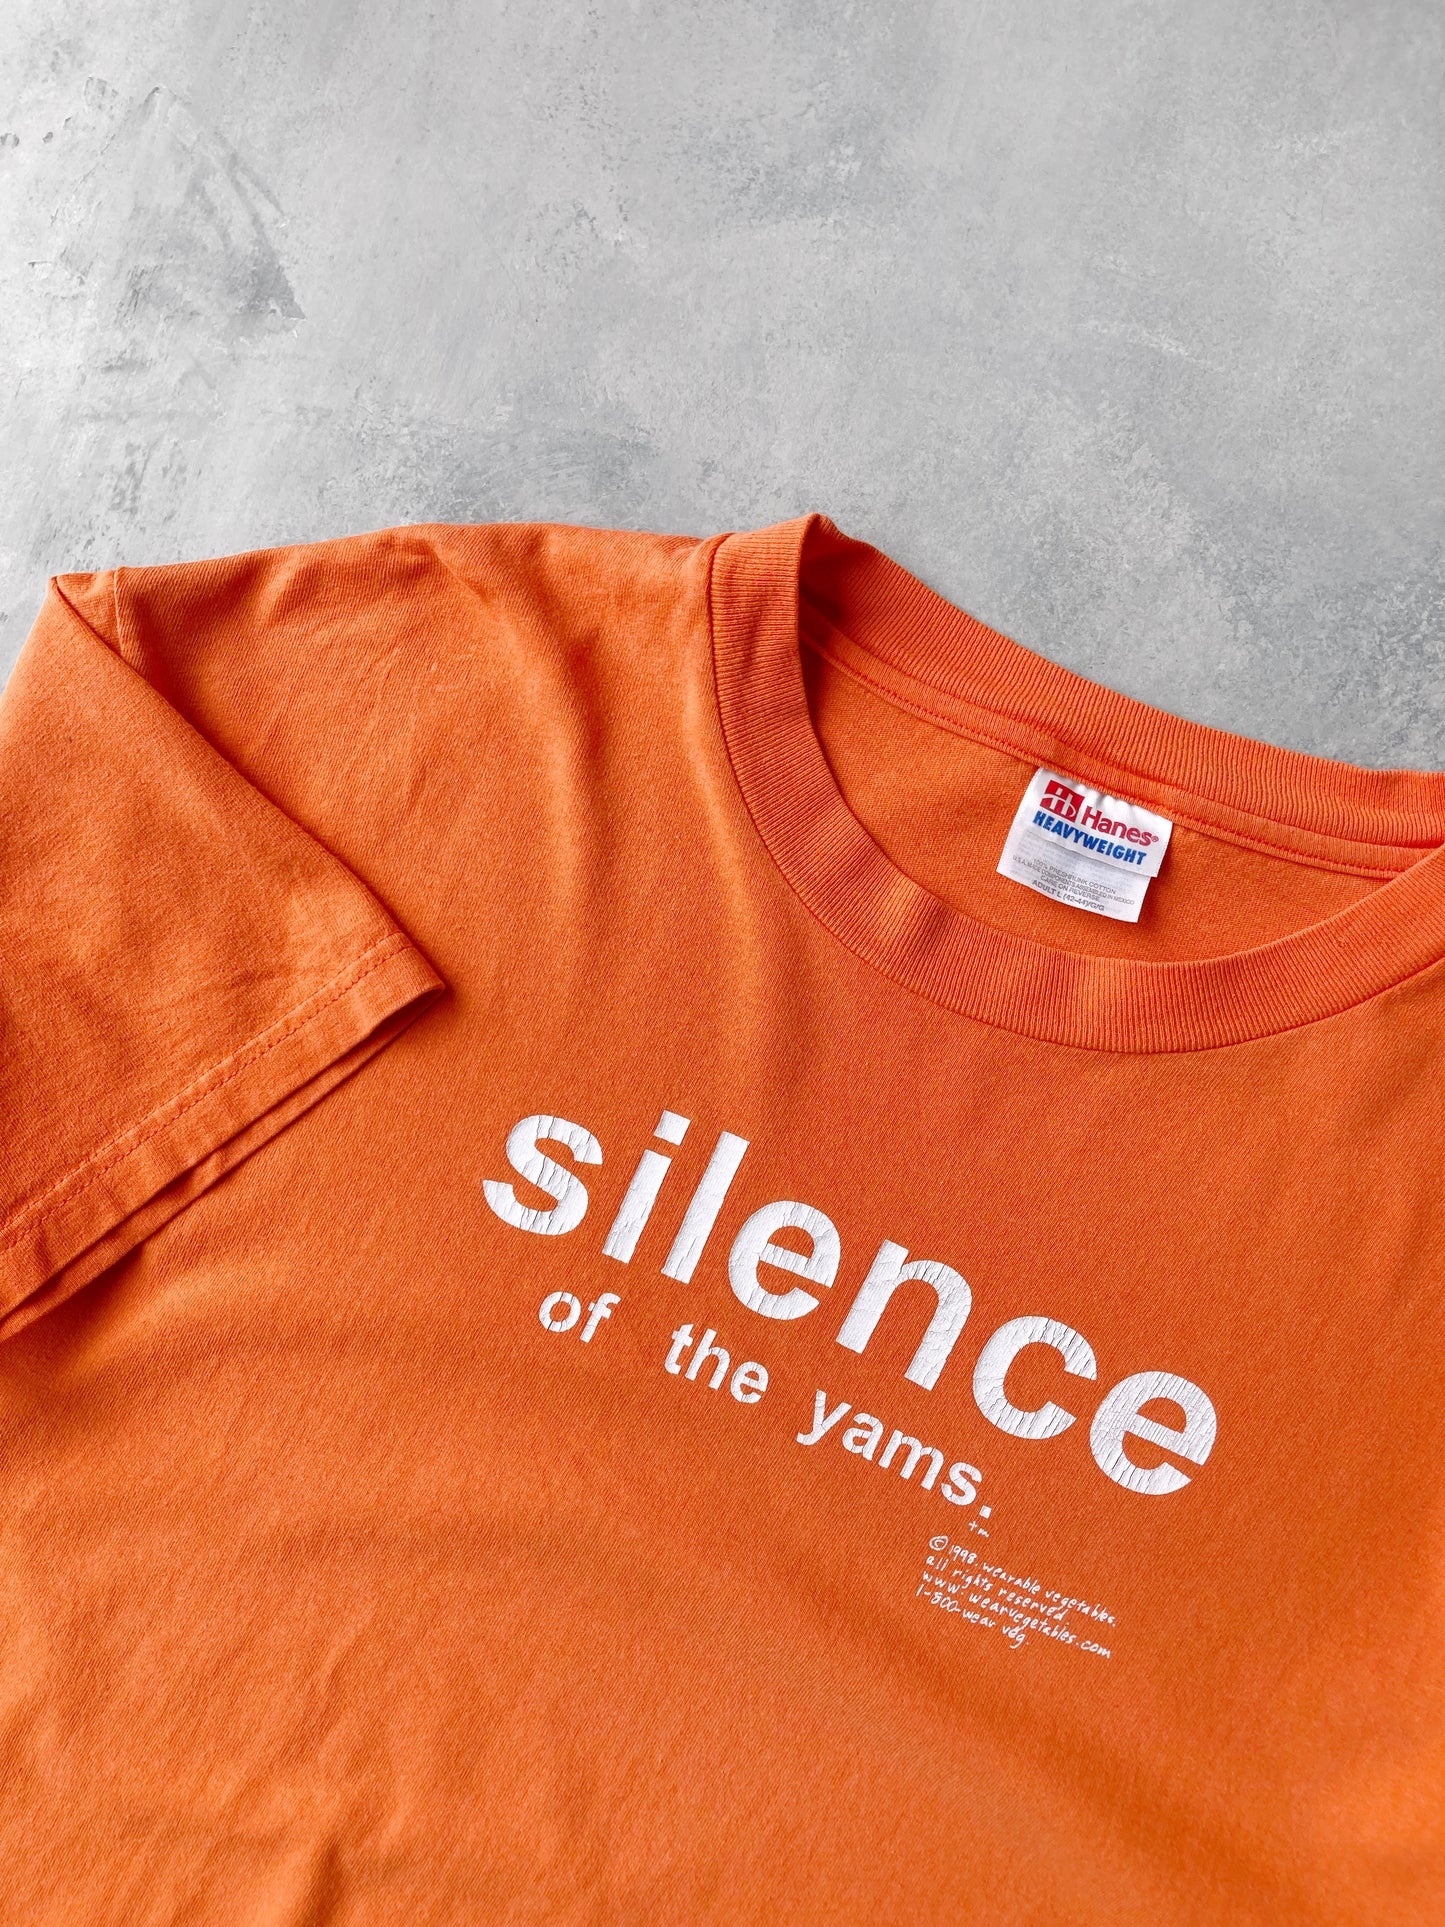 Silence of the Yams T-Shirt '98 - Large